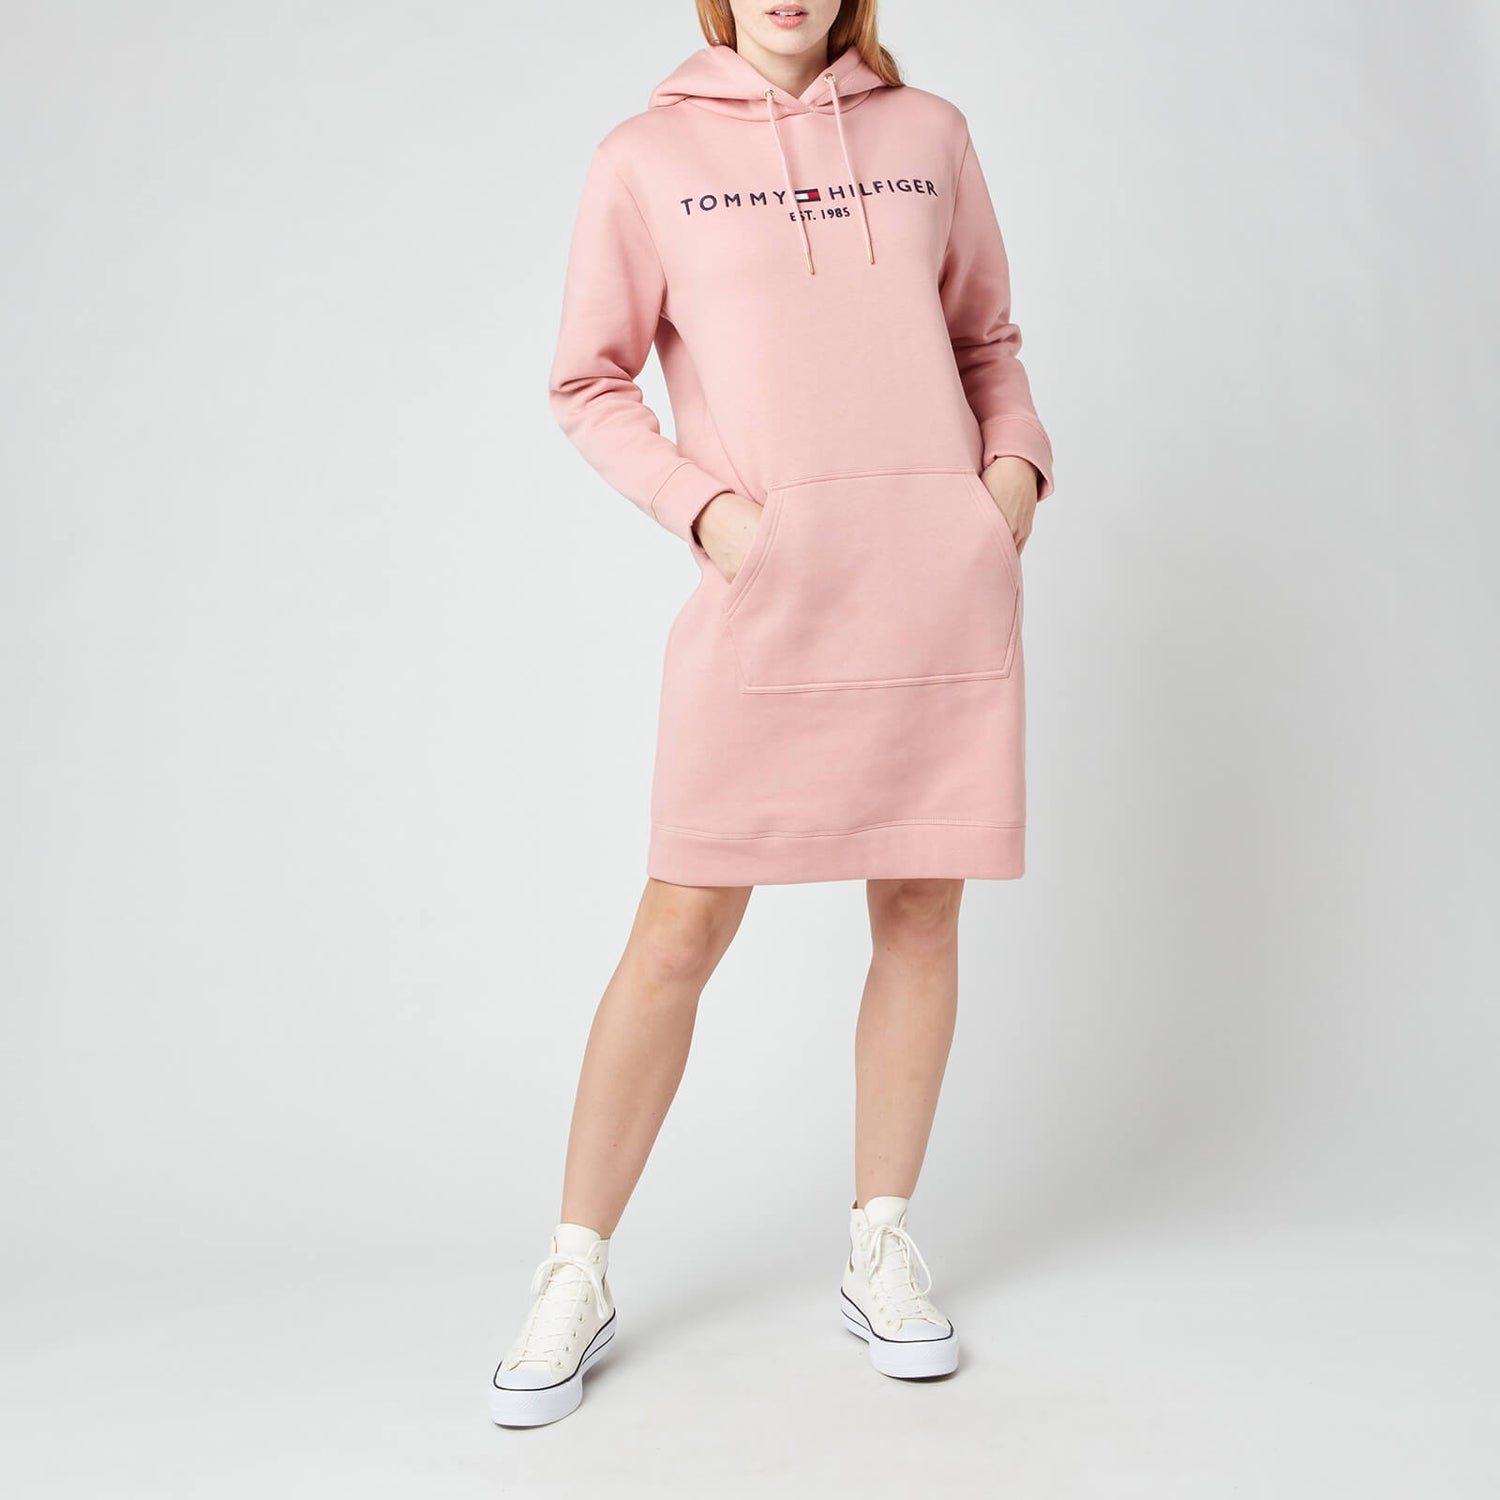 Tommy Hilfiger Women's TH Essentials Hilfiger Hoodie Dress - Soothing Pink